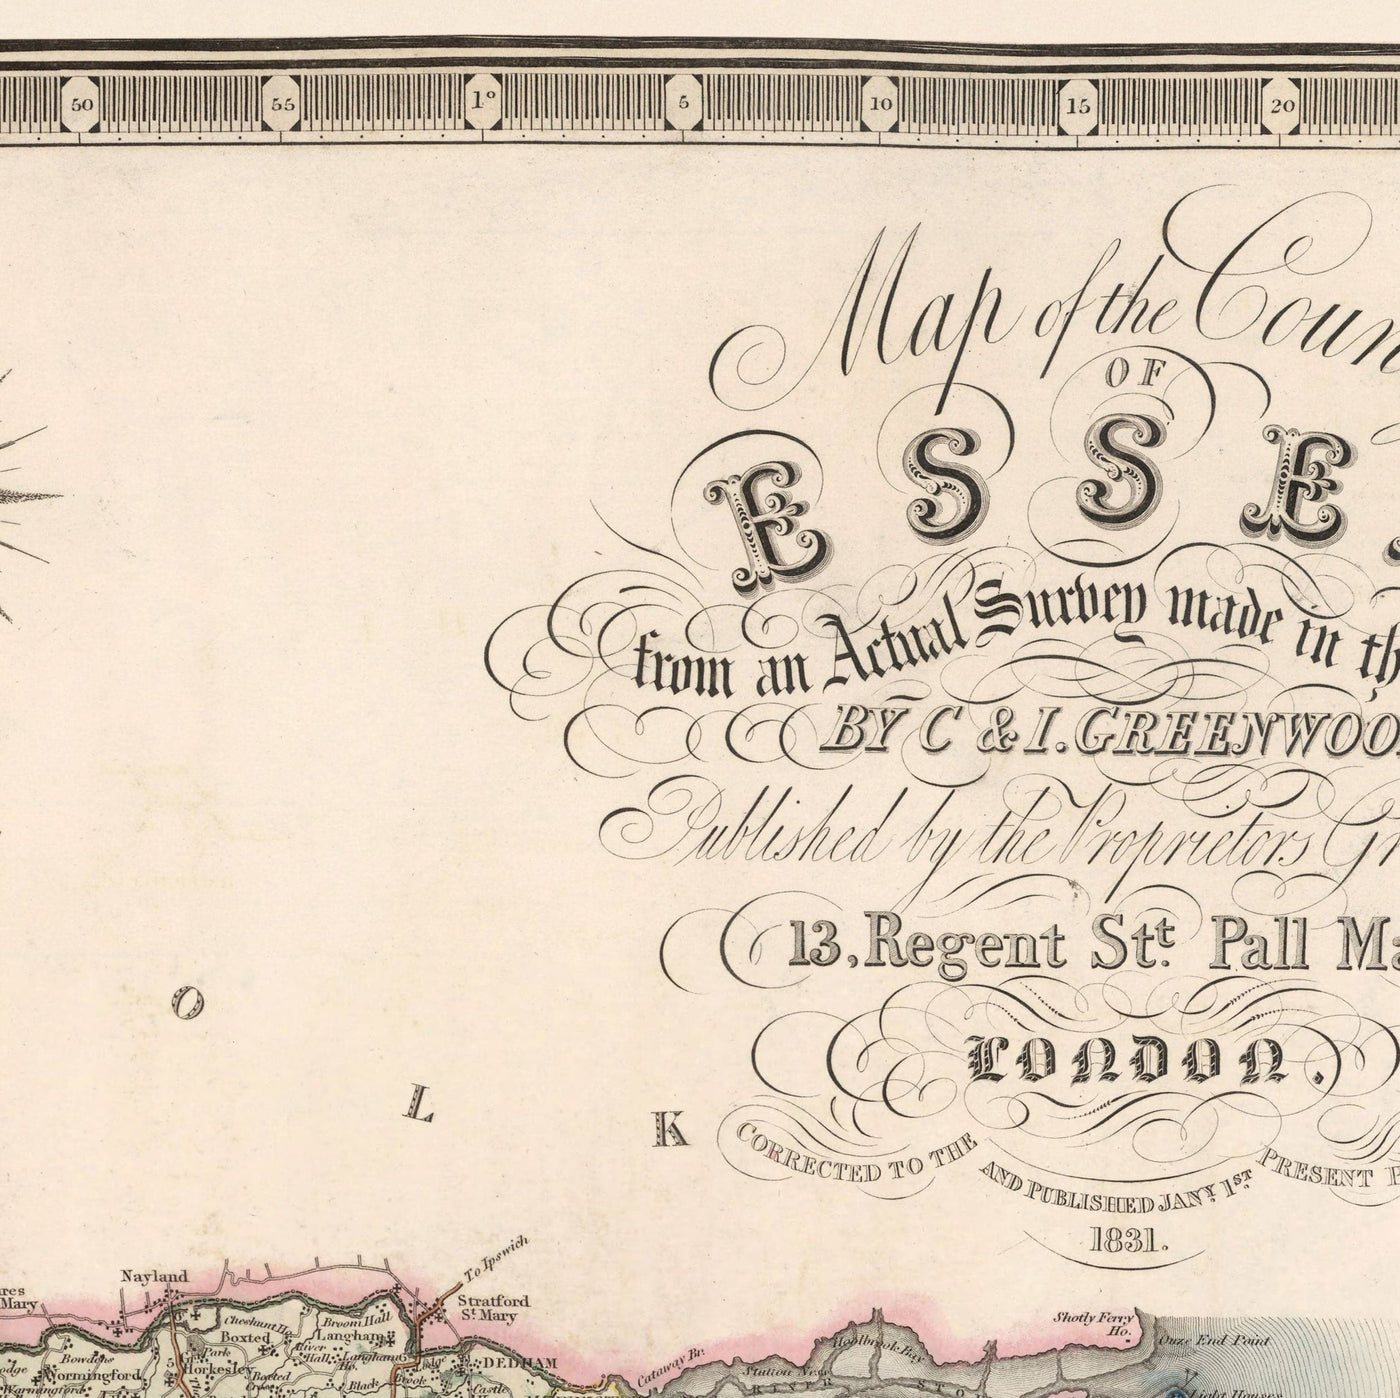 Mapa antiguo de Essex, 1831 por Greenwood & Co. - Southend, Colchester, Chelmsford, Romford, Dagenham, Brentwood, Basildon